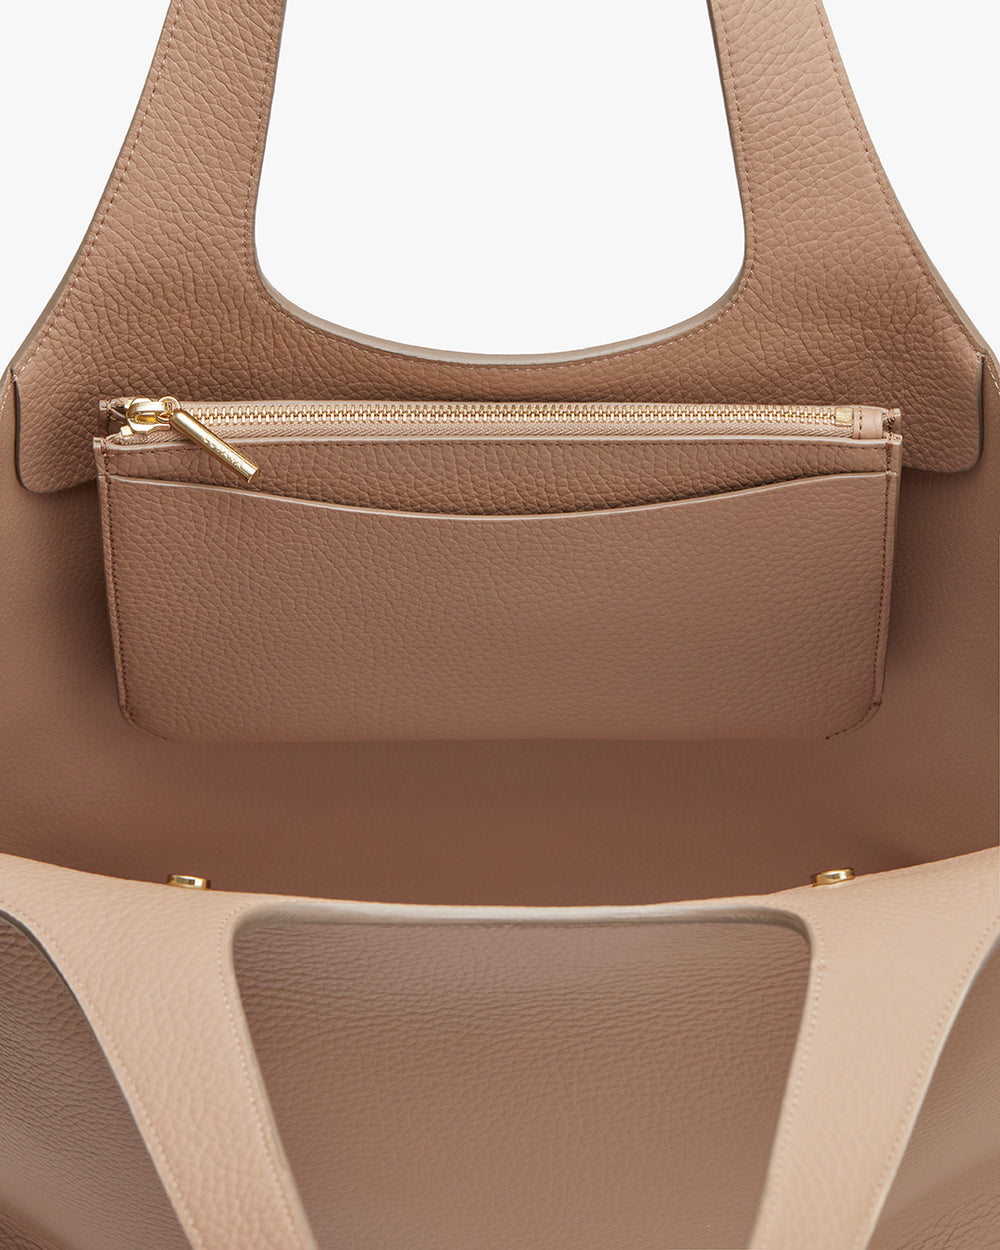 Handbag with exterior zipper pocket